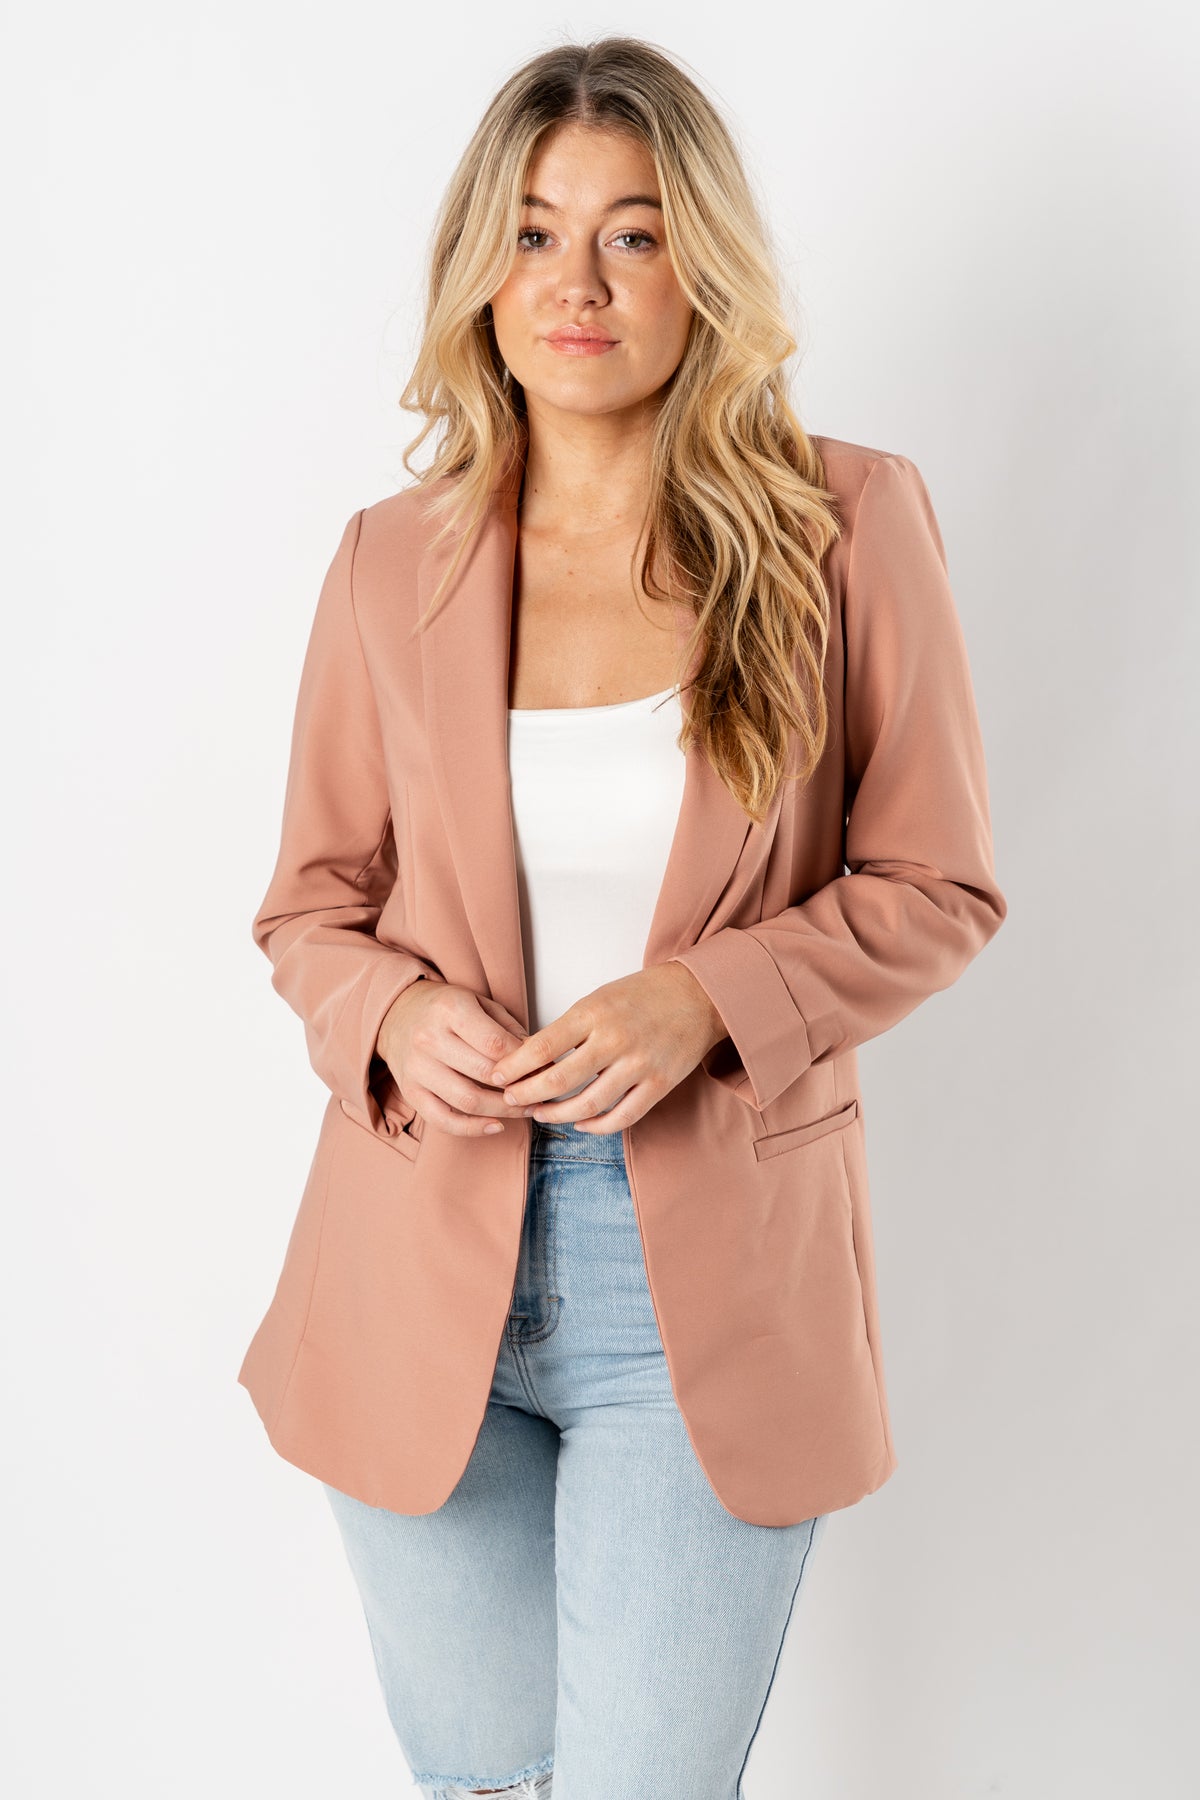 Boyfriend blazer wood pink – Trendy Jackets | Cute Fashion Blazers at Lush Fashion Lounge Boutique in Oklahoma City